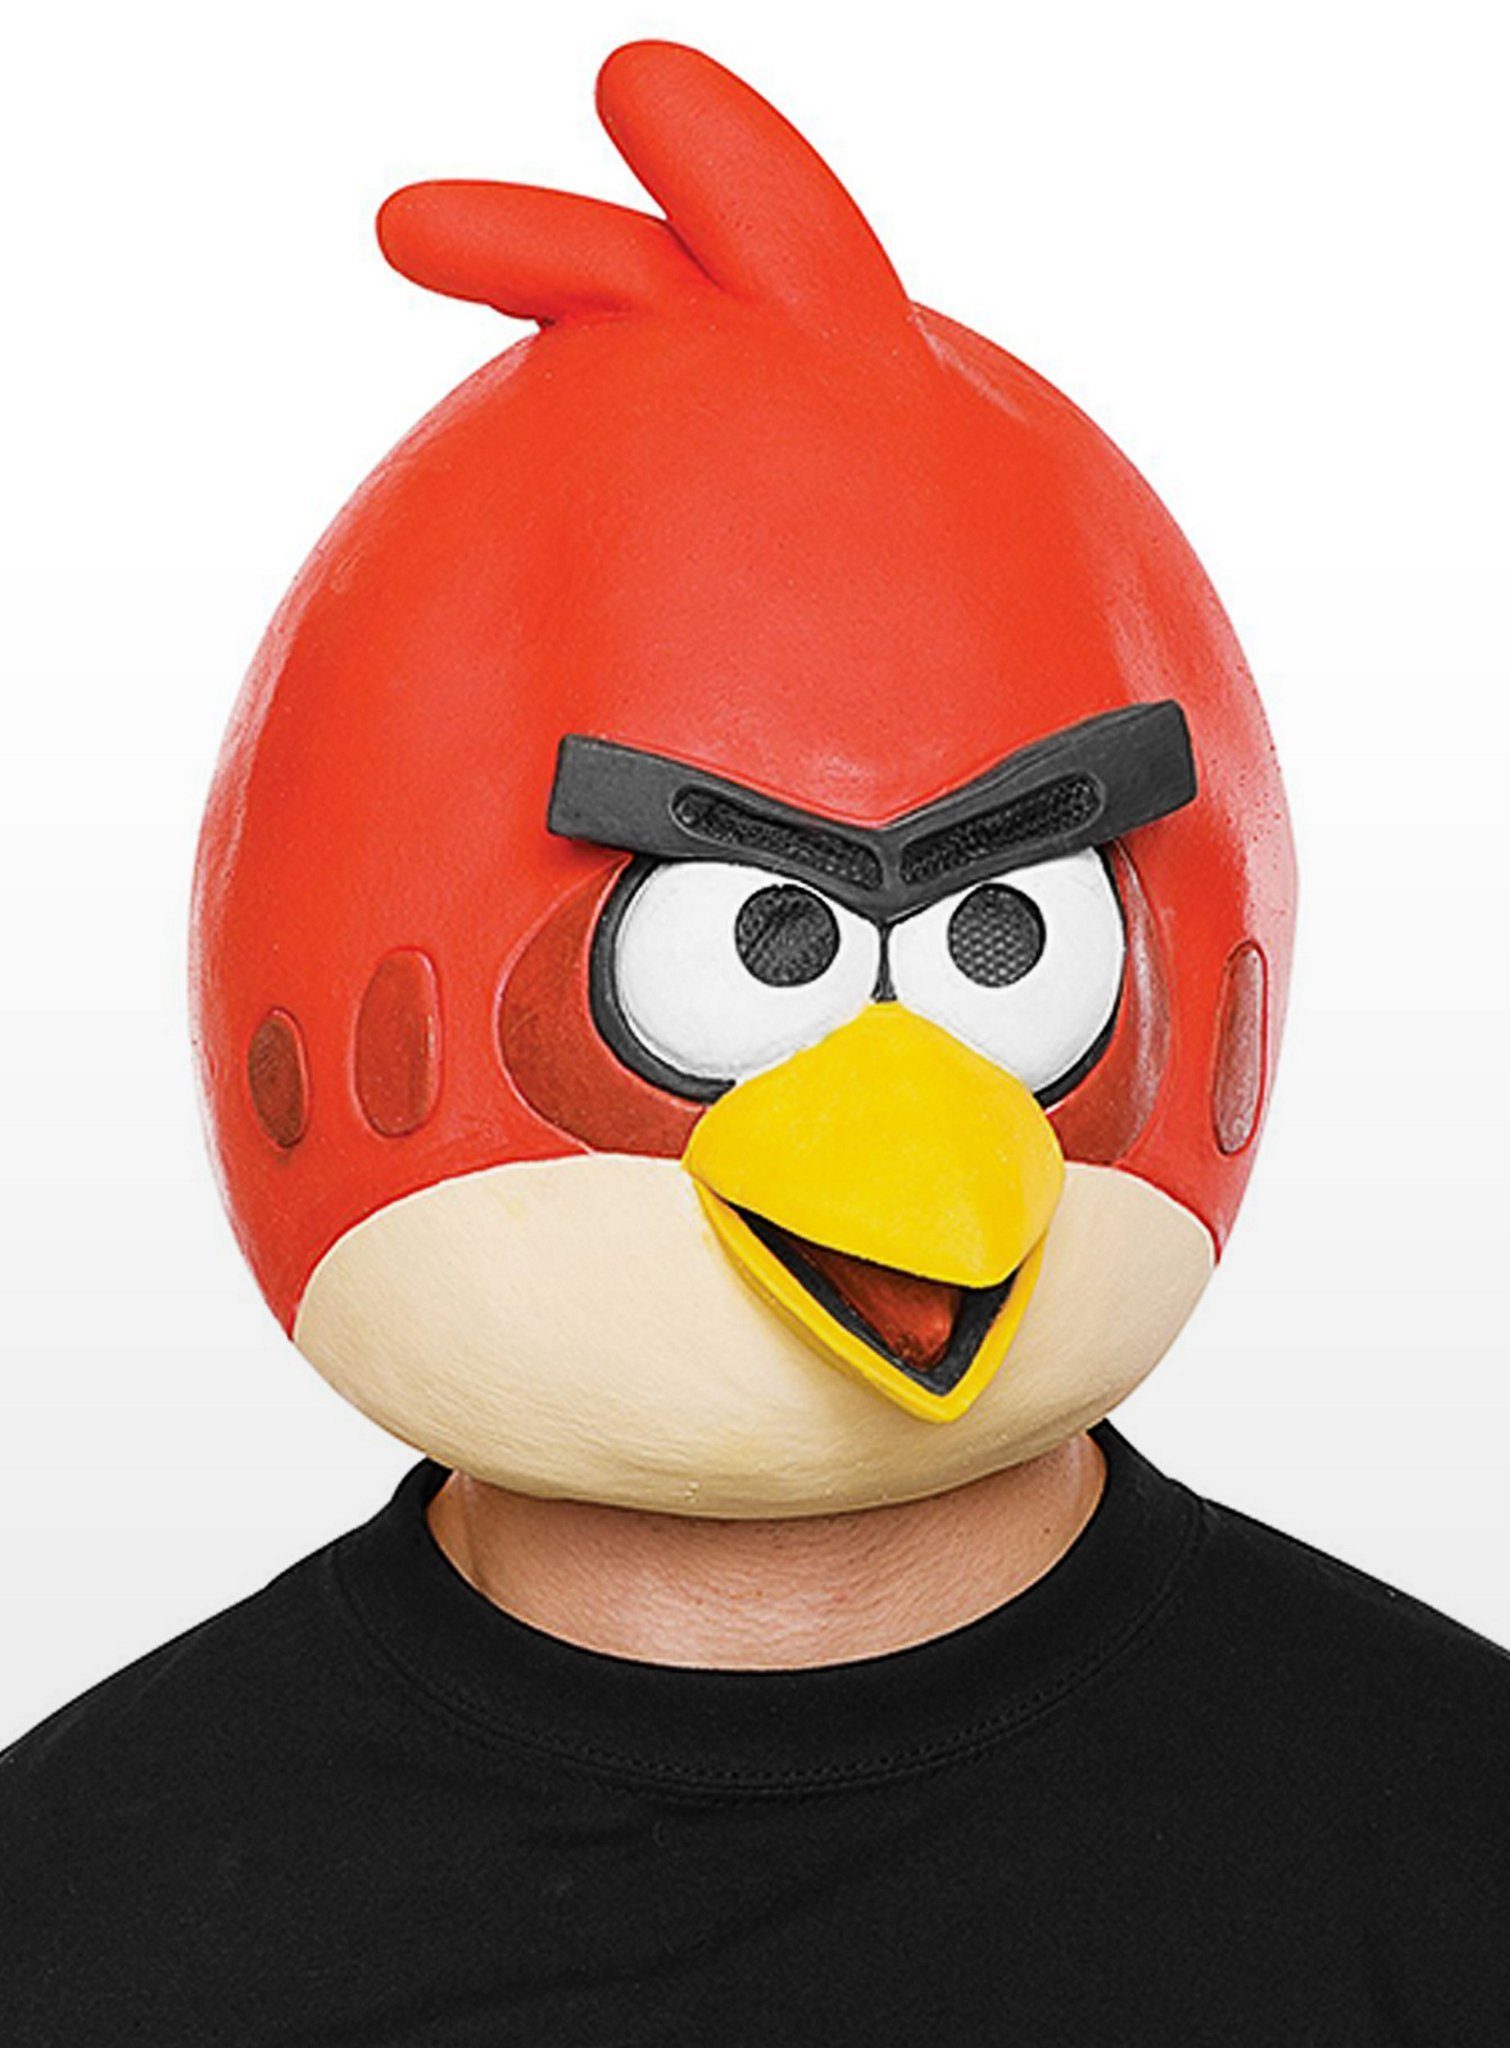 Metamorph Verkleidungsmaske Angry Birds rot (Sonderposten), Original lizenzierte Angry Birds-Maske aus dem Kultspiel